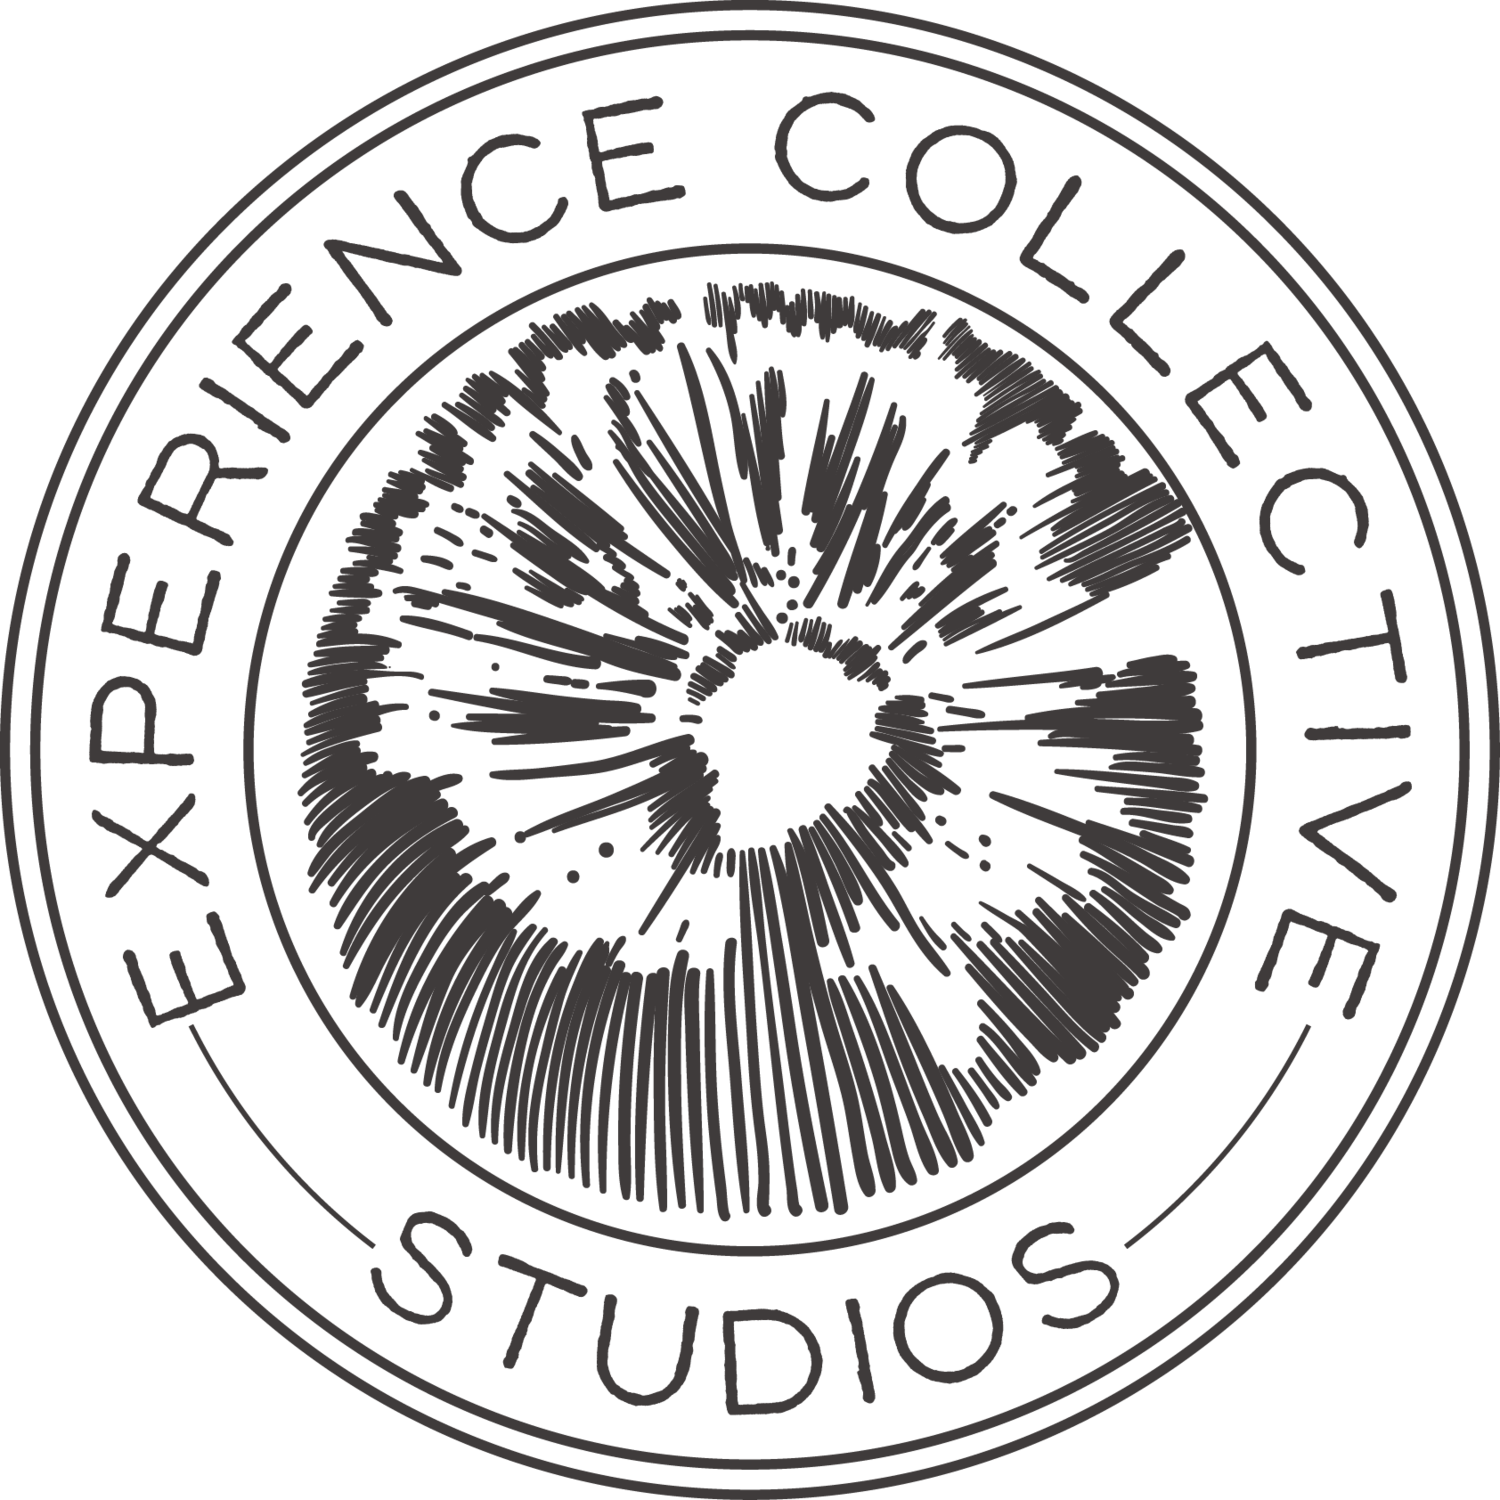 Experience Collective Studios